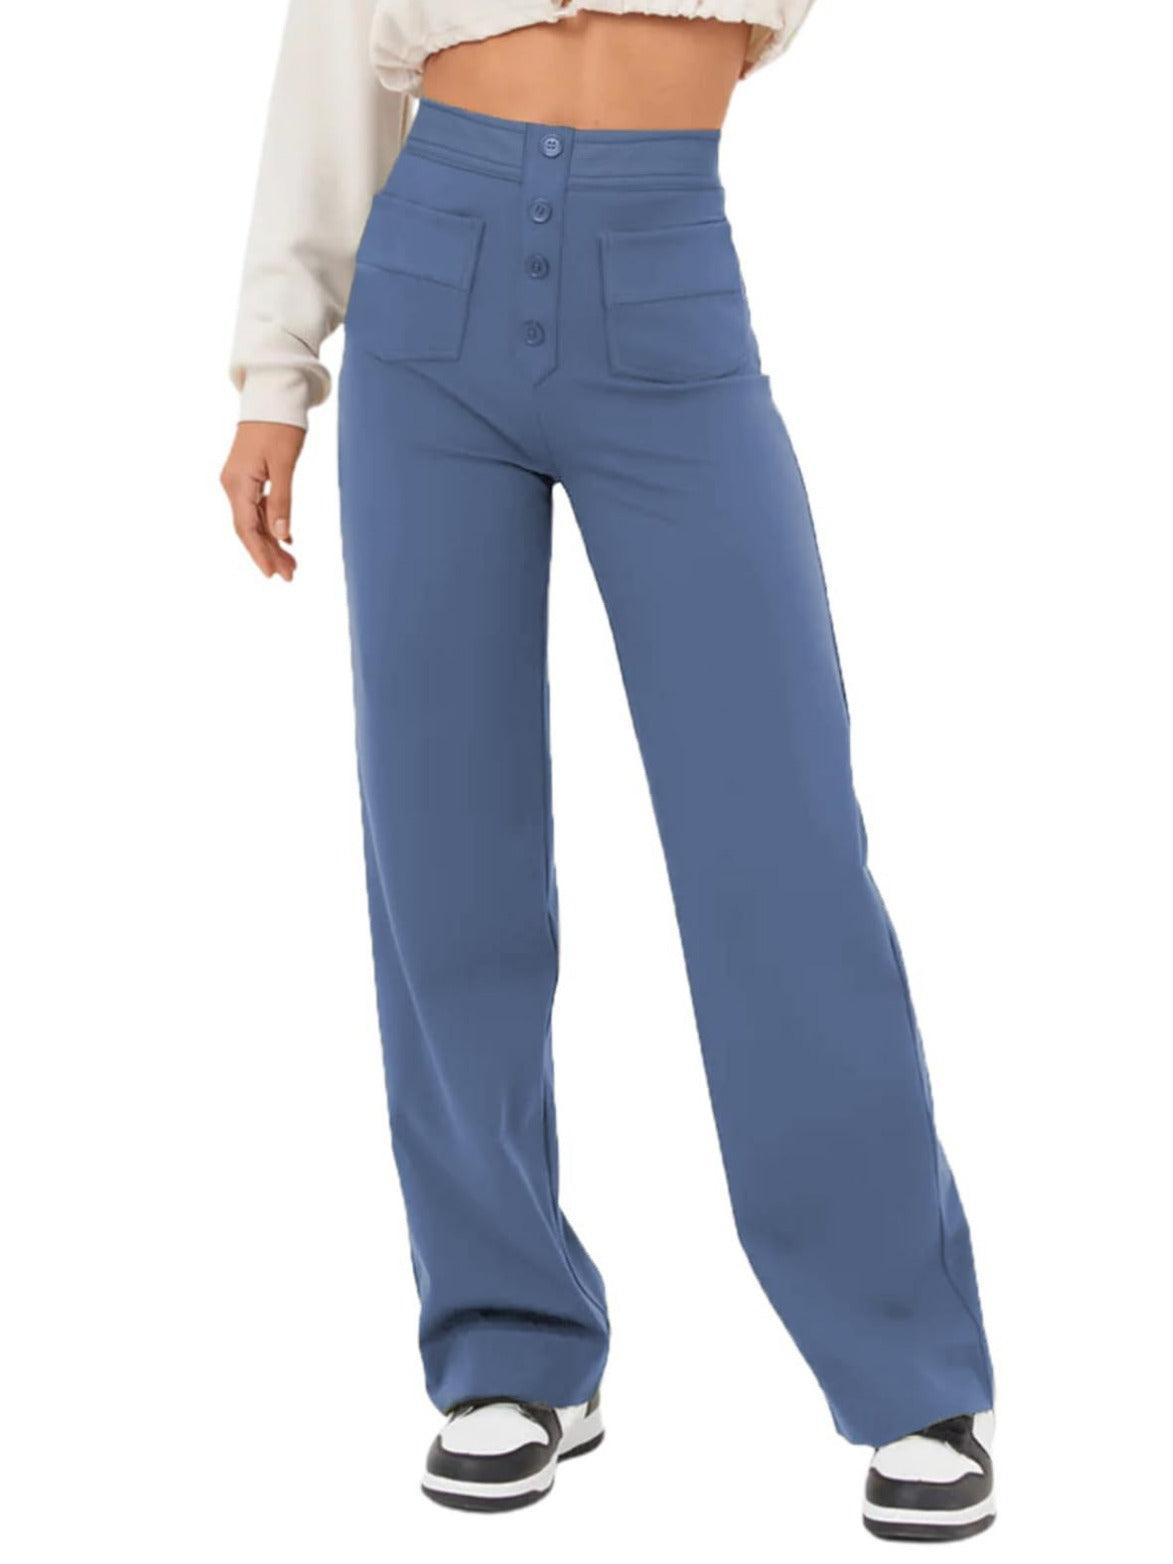 Women's Casual Straight Pants High Waist Button women's clothing